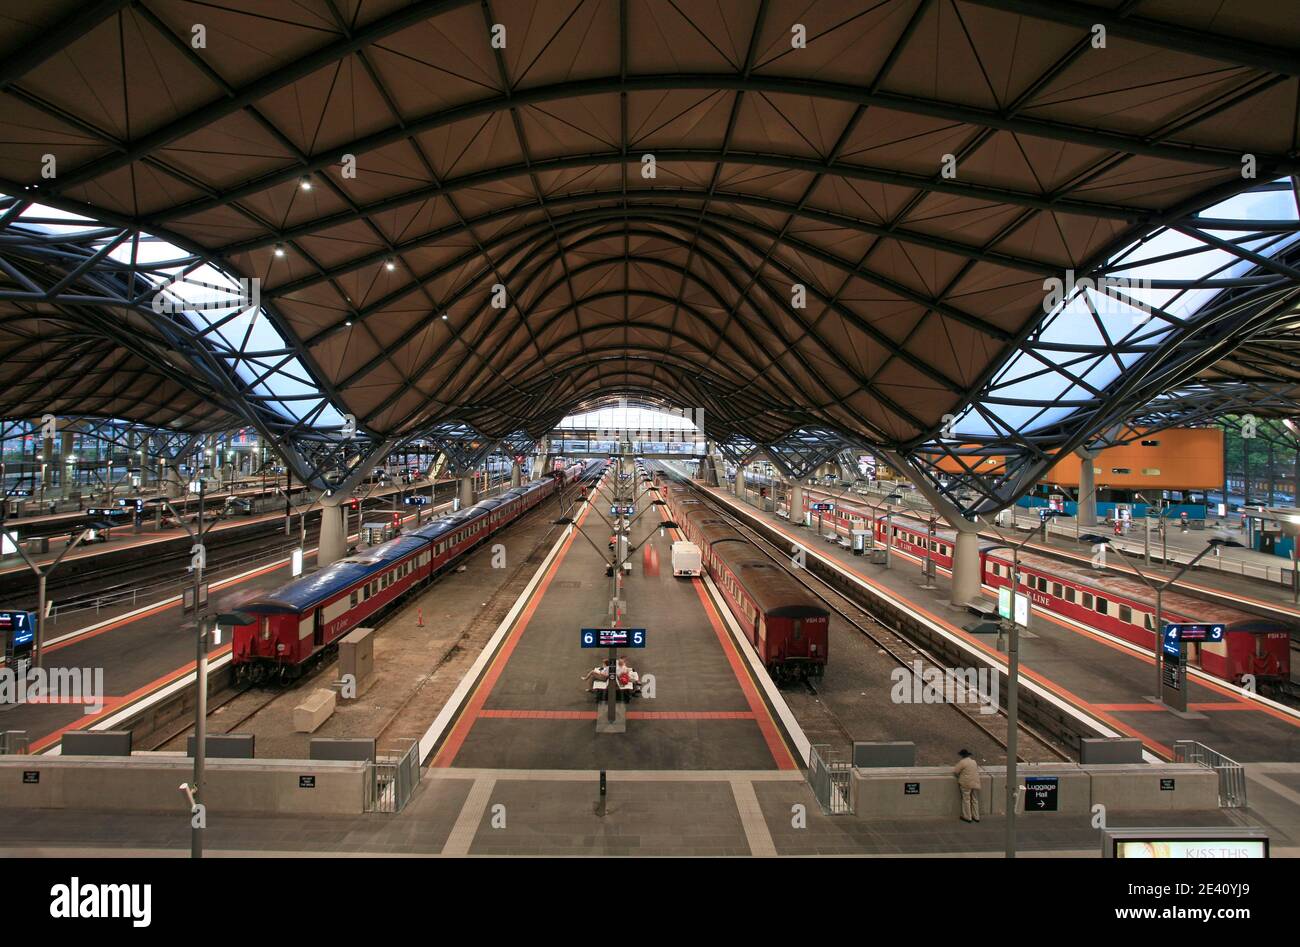 Southern Cross Station Melbourne, bahnhof, stazione ferroviaria, stazione ferroviaria, stazione, estaci-n ferrosiaria, australien, australia, architetto Nichola Foto Stock